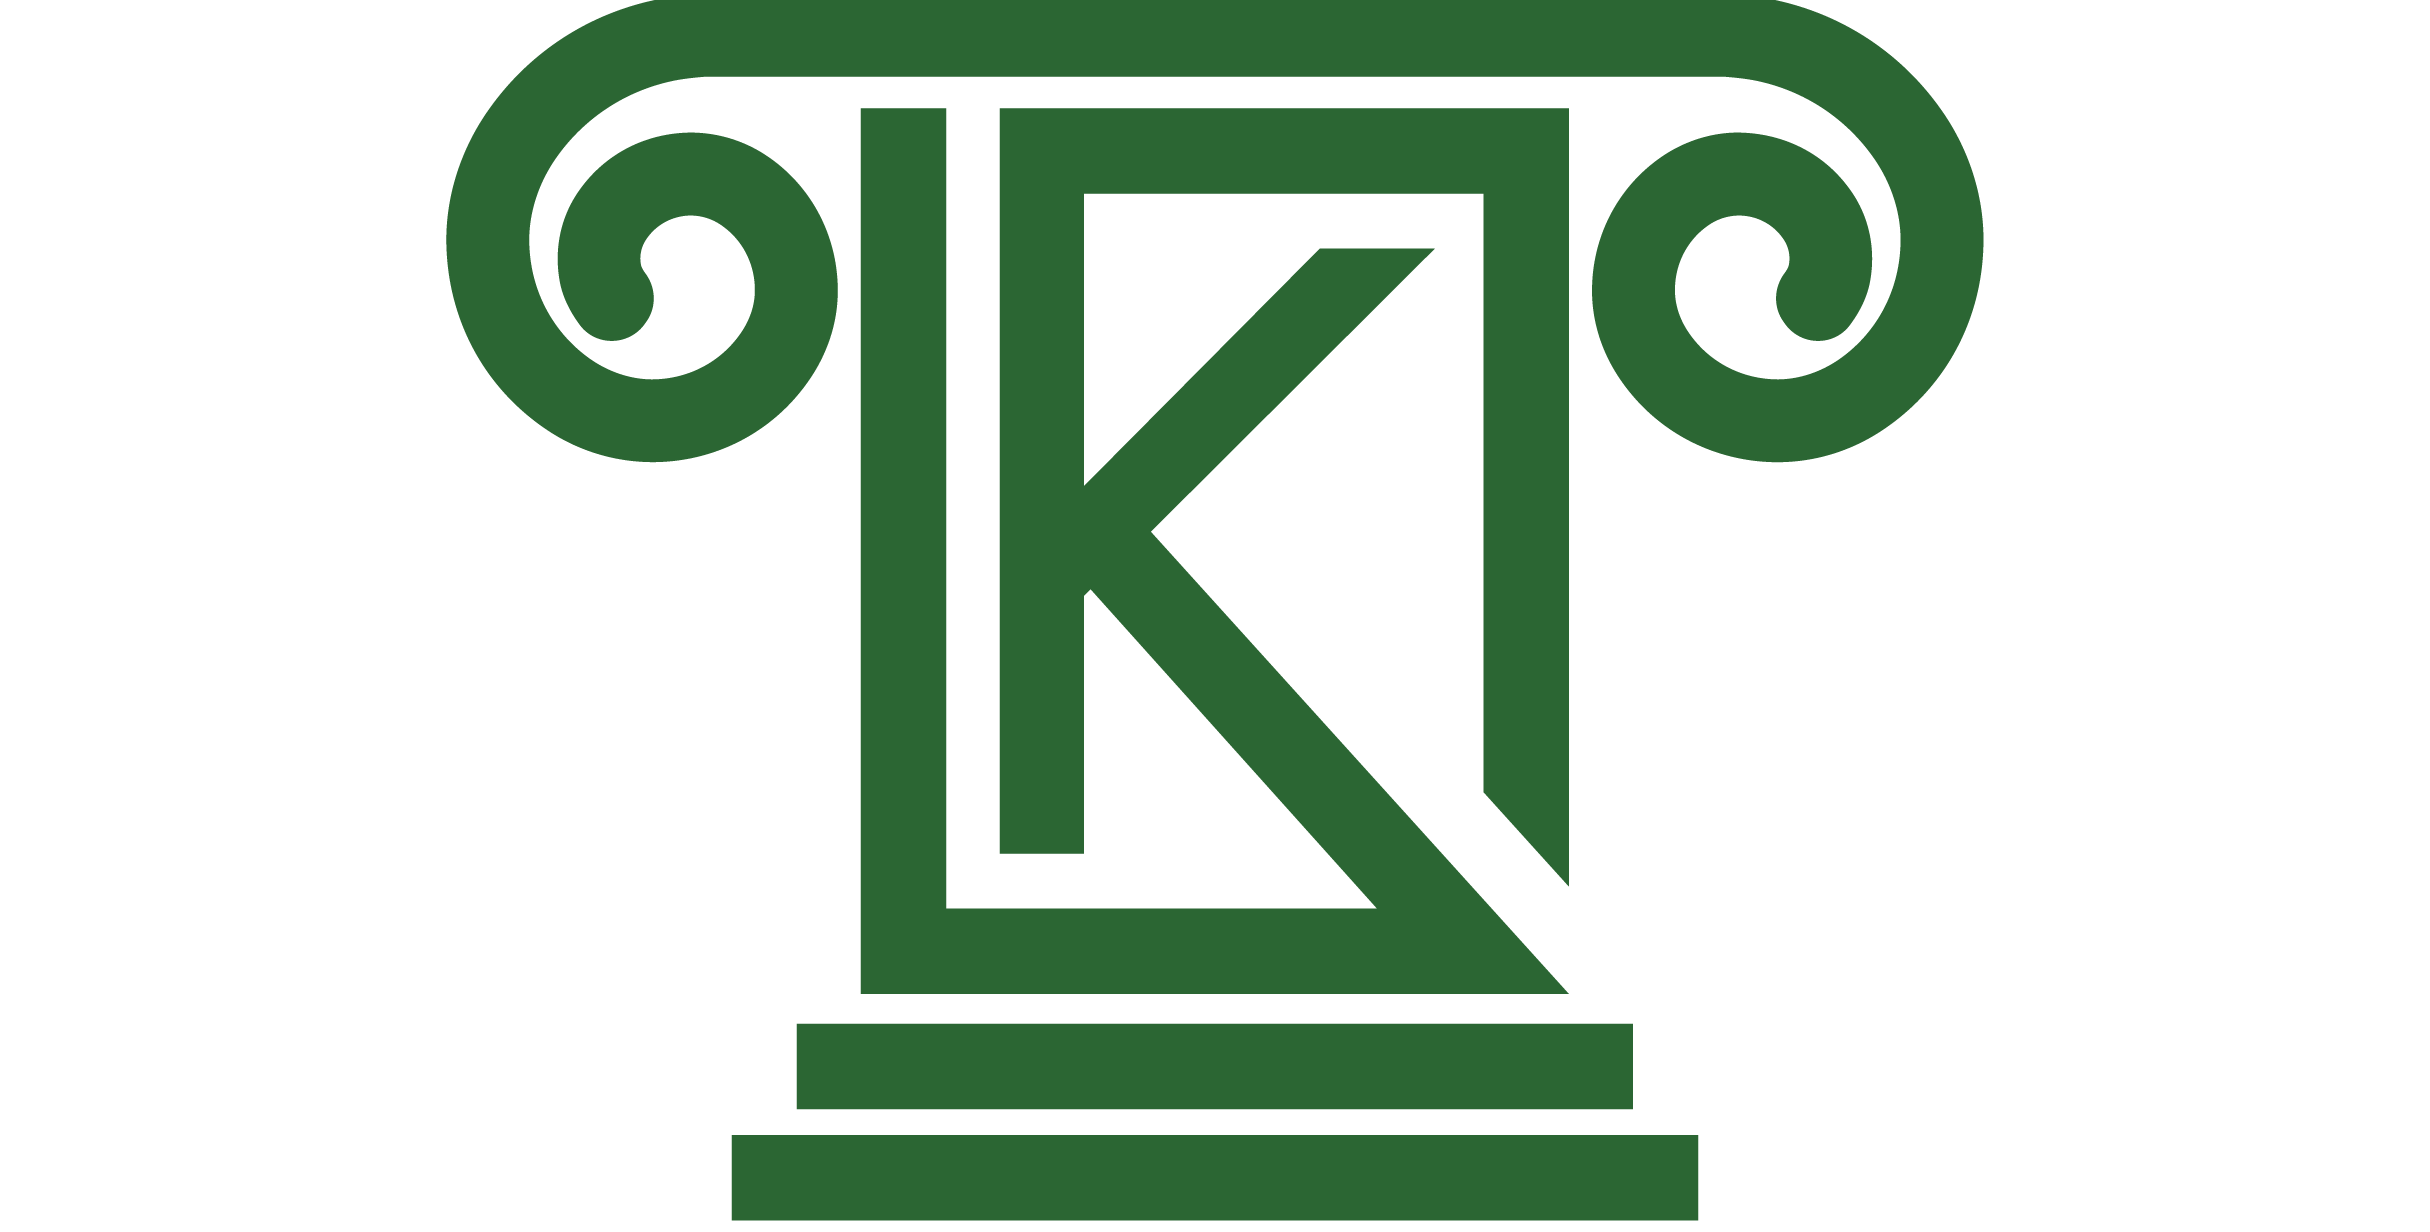 Kecser LAW FIRM logo